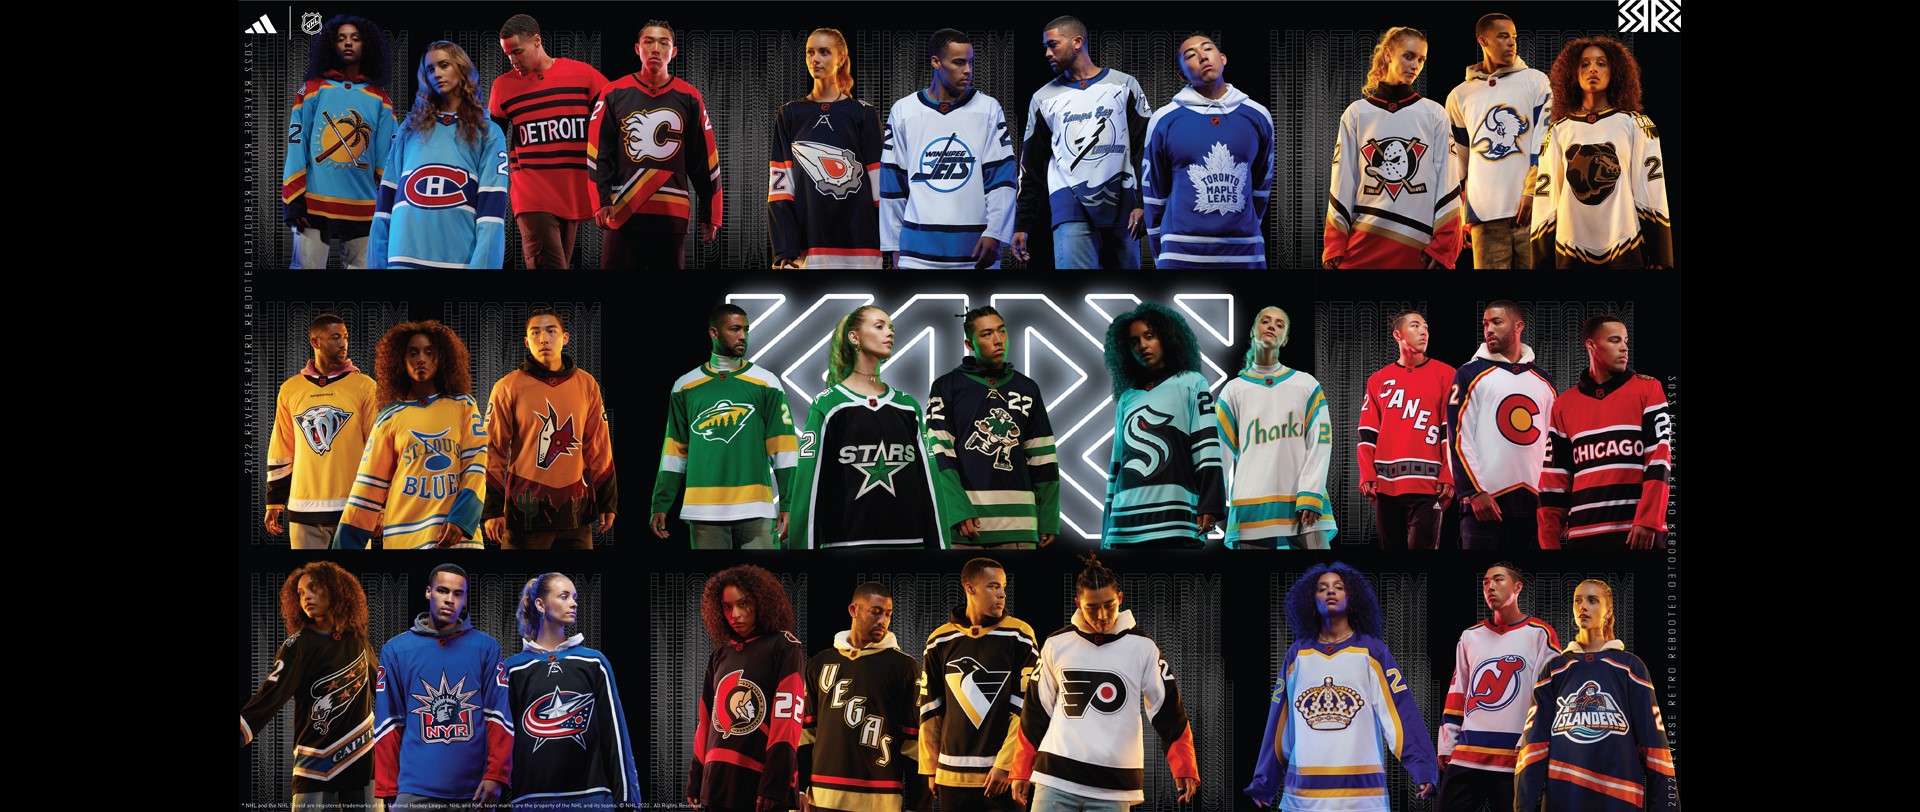 Penguins 2019 Stadium Series jerseys : r/hockey